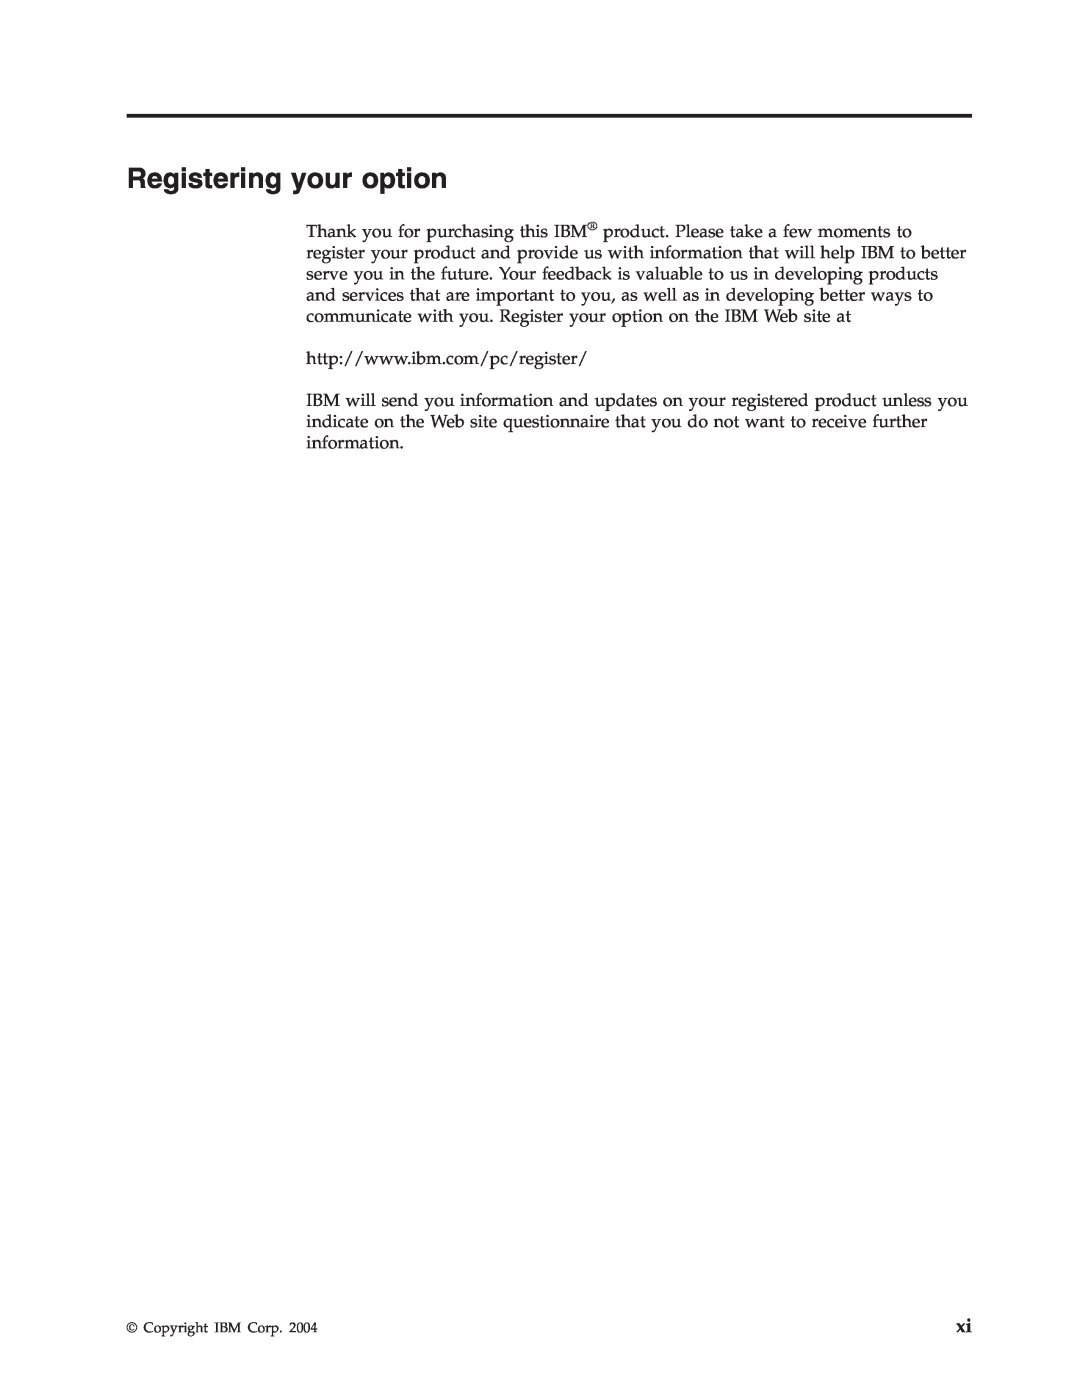 IBM M400 manual Registering your option 